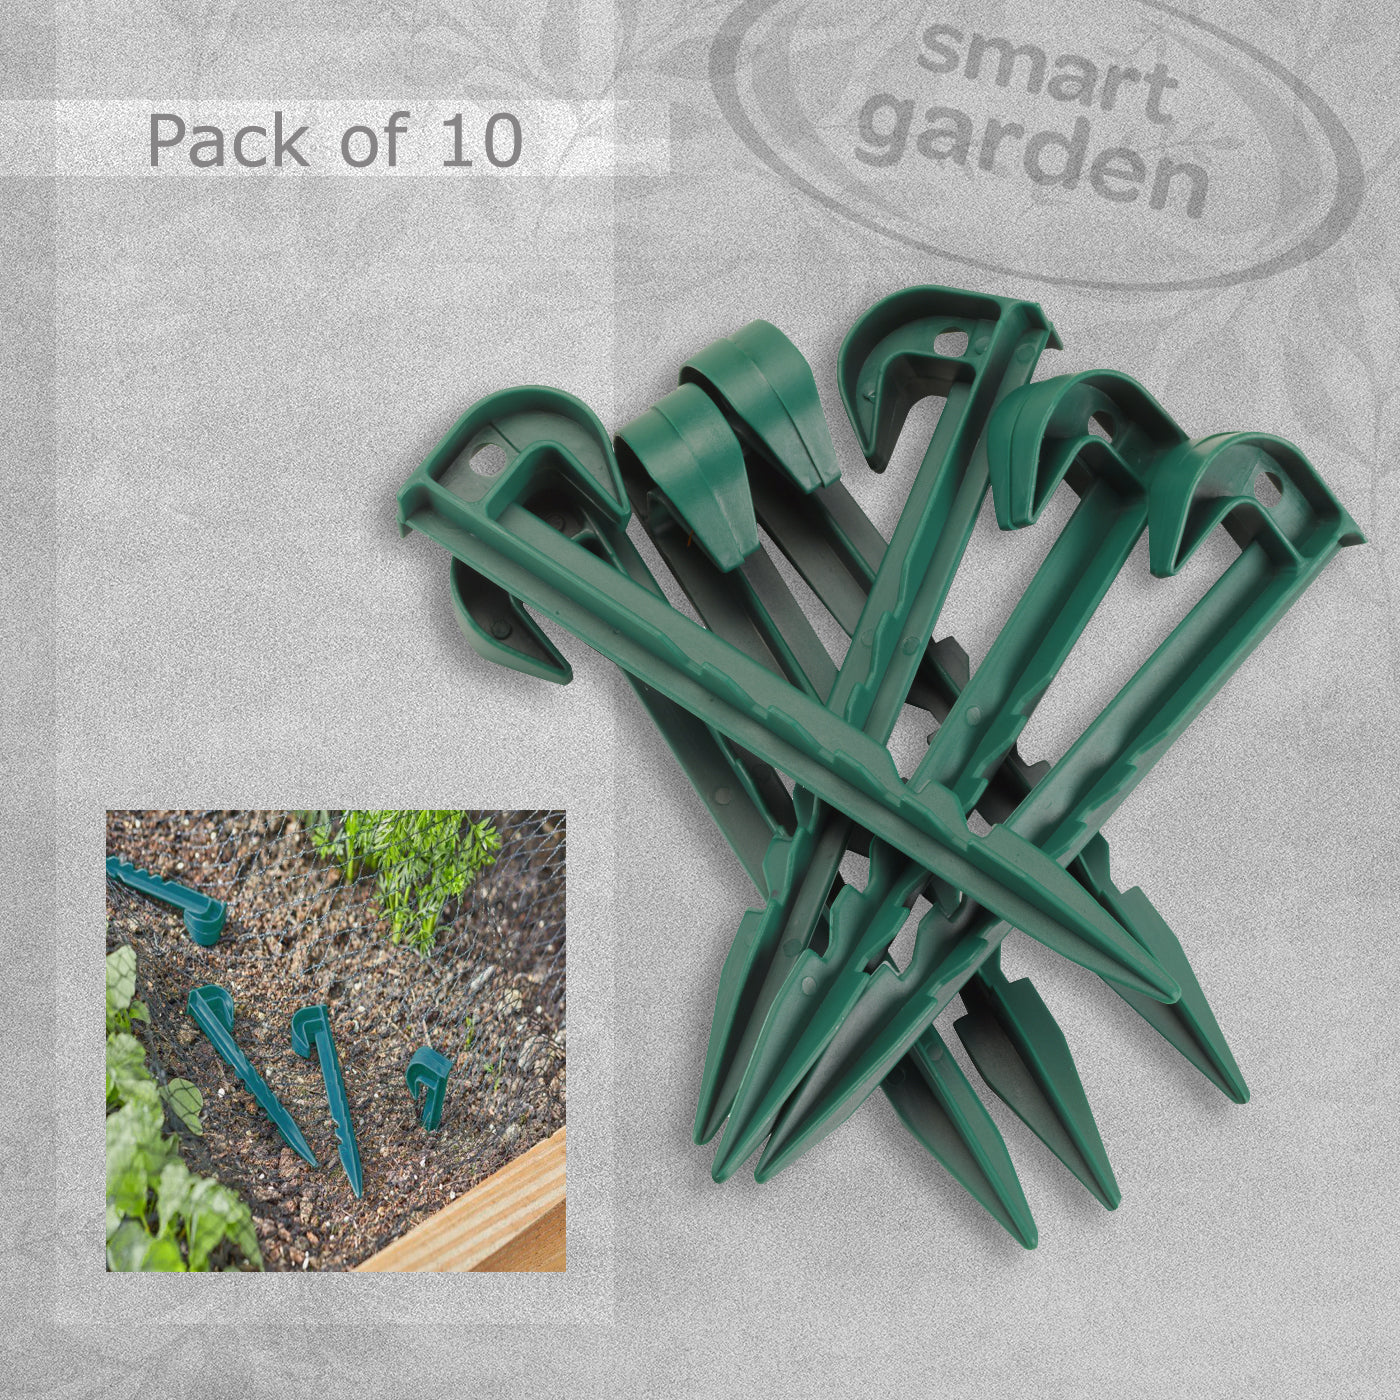 Smart Garden Multi-Use Garden Pegs - Pack of 10